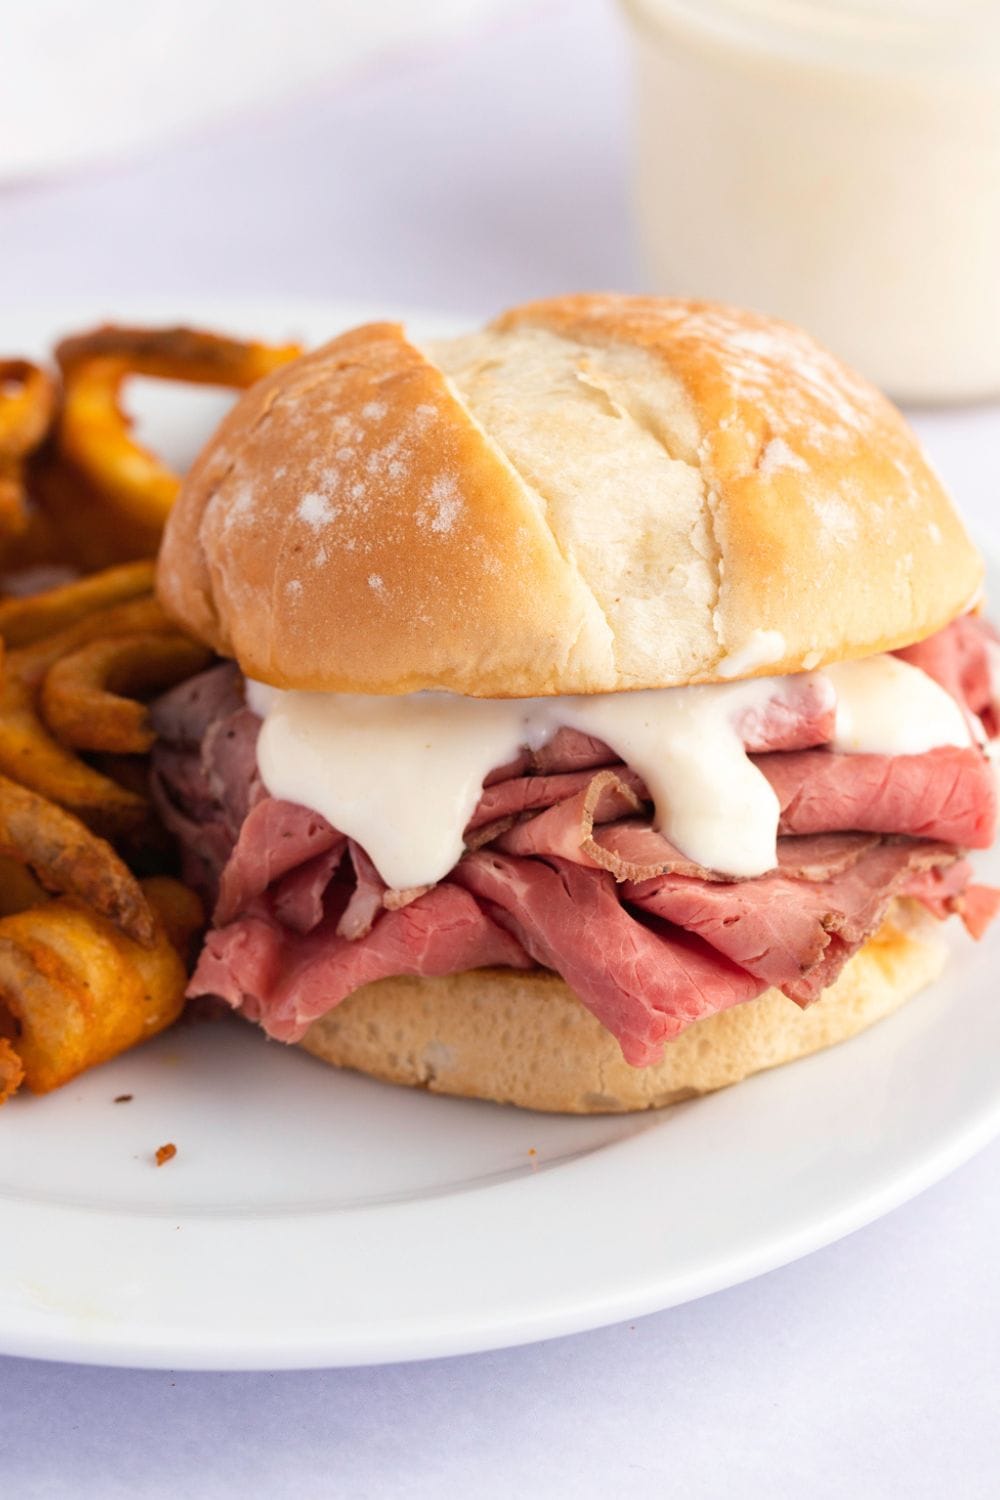 Homemade Sandwich with Ham, Fries and Horseradish Sauce